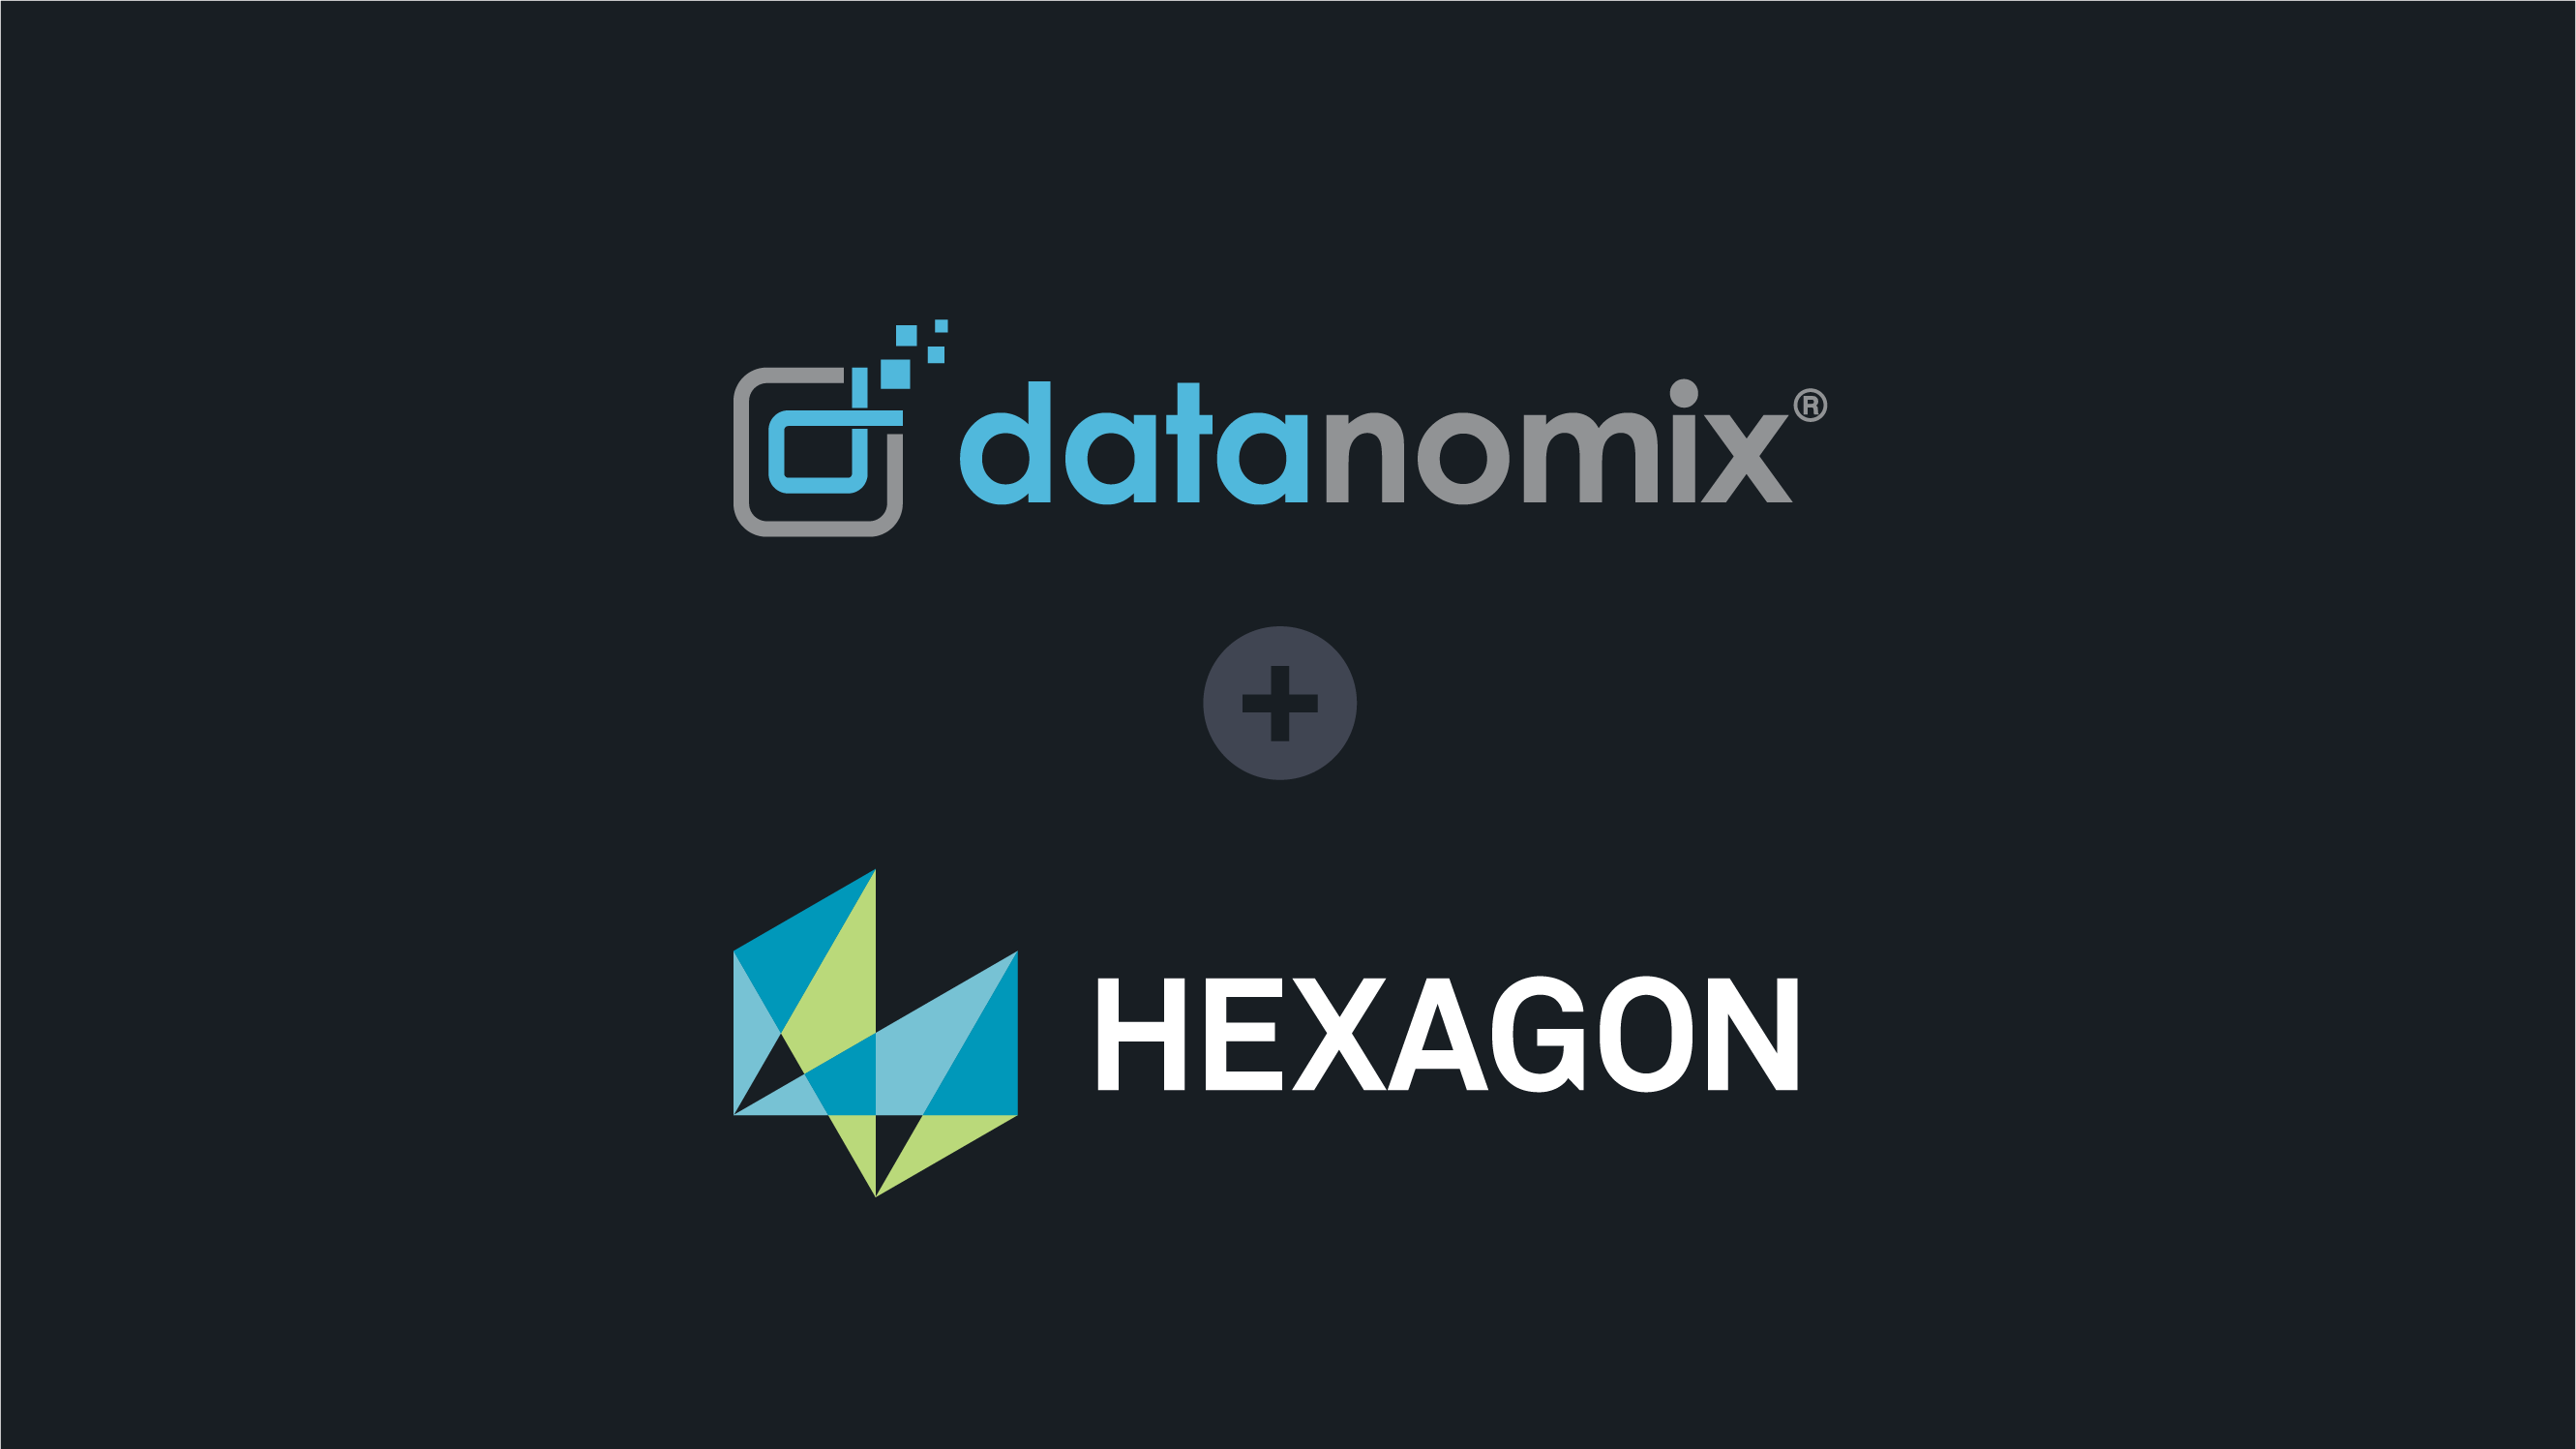 Datanomix + Hexagon